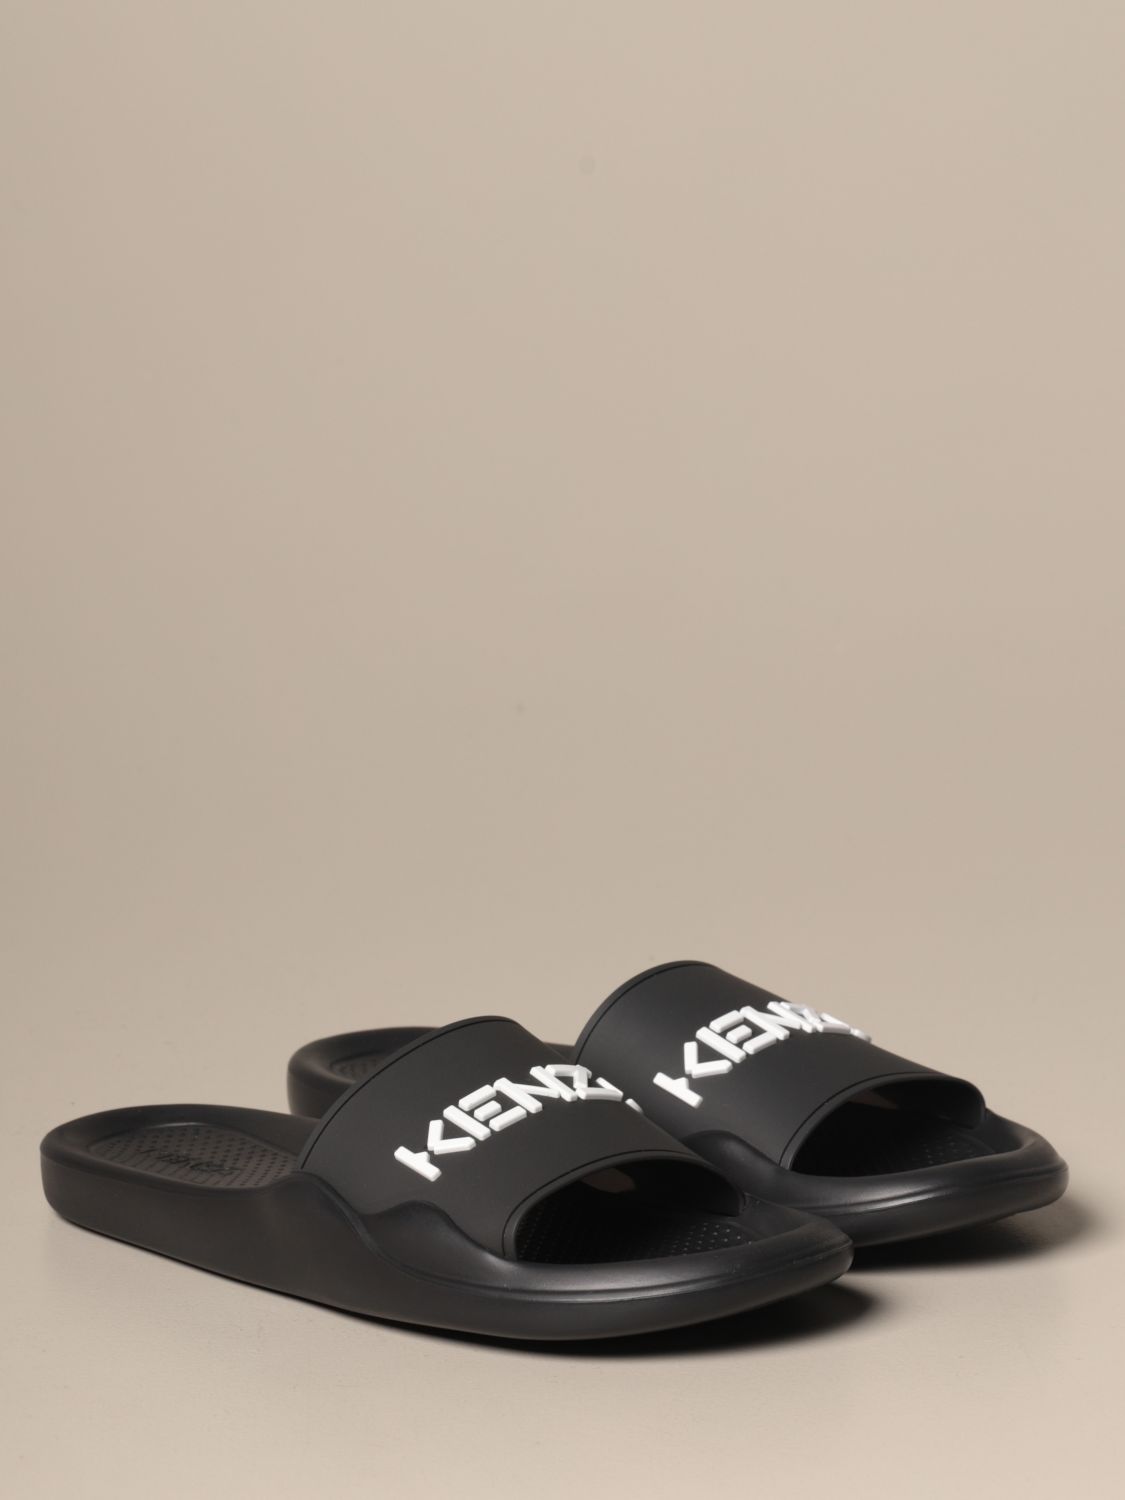 kenzo sandals mens